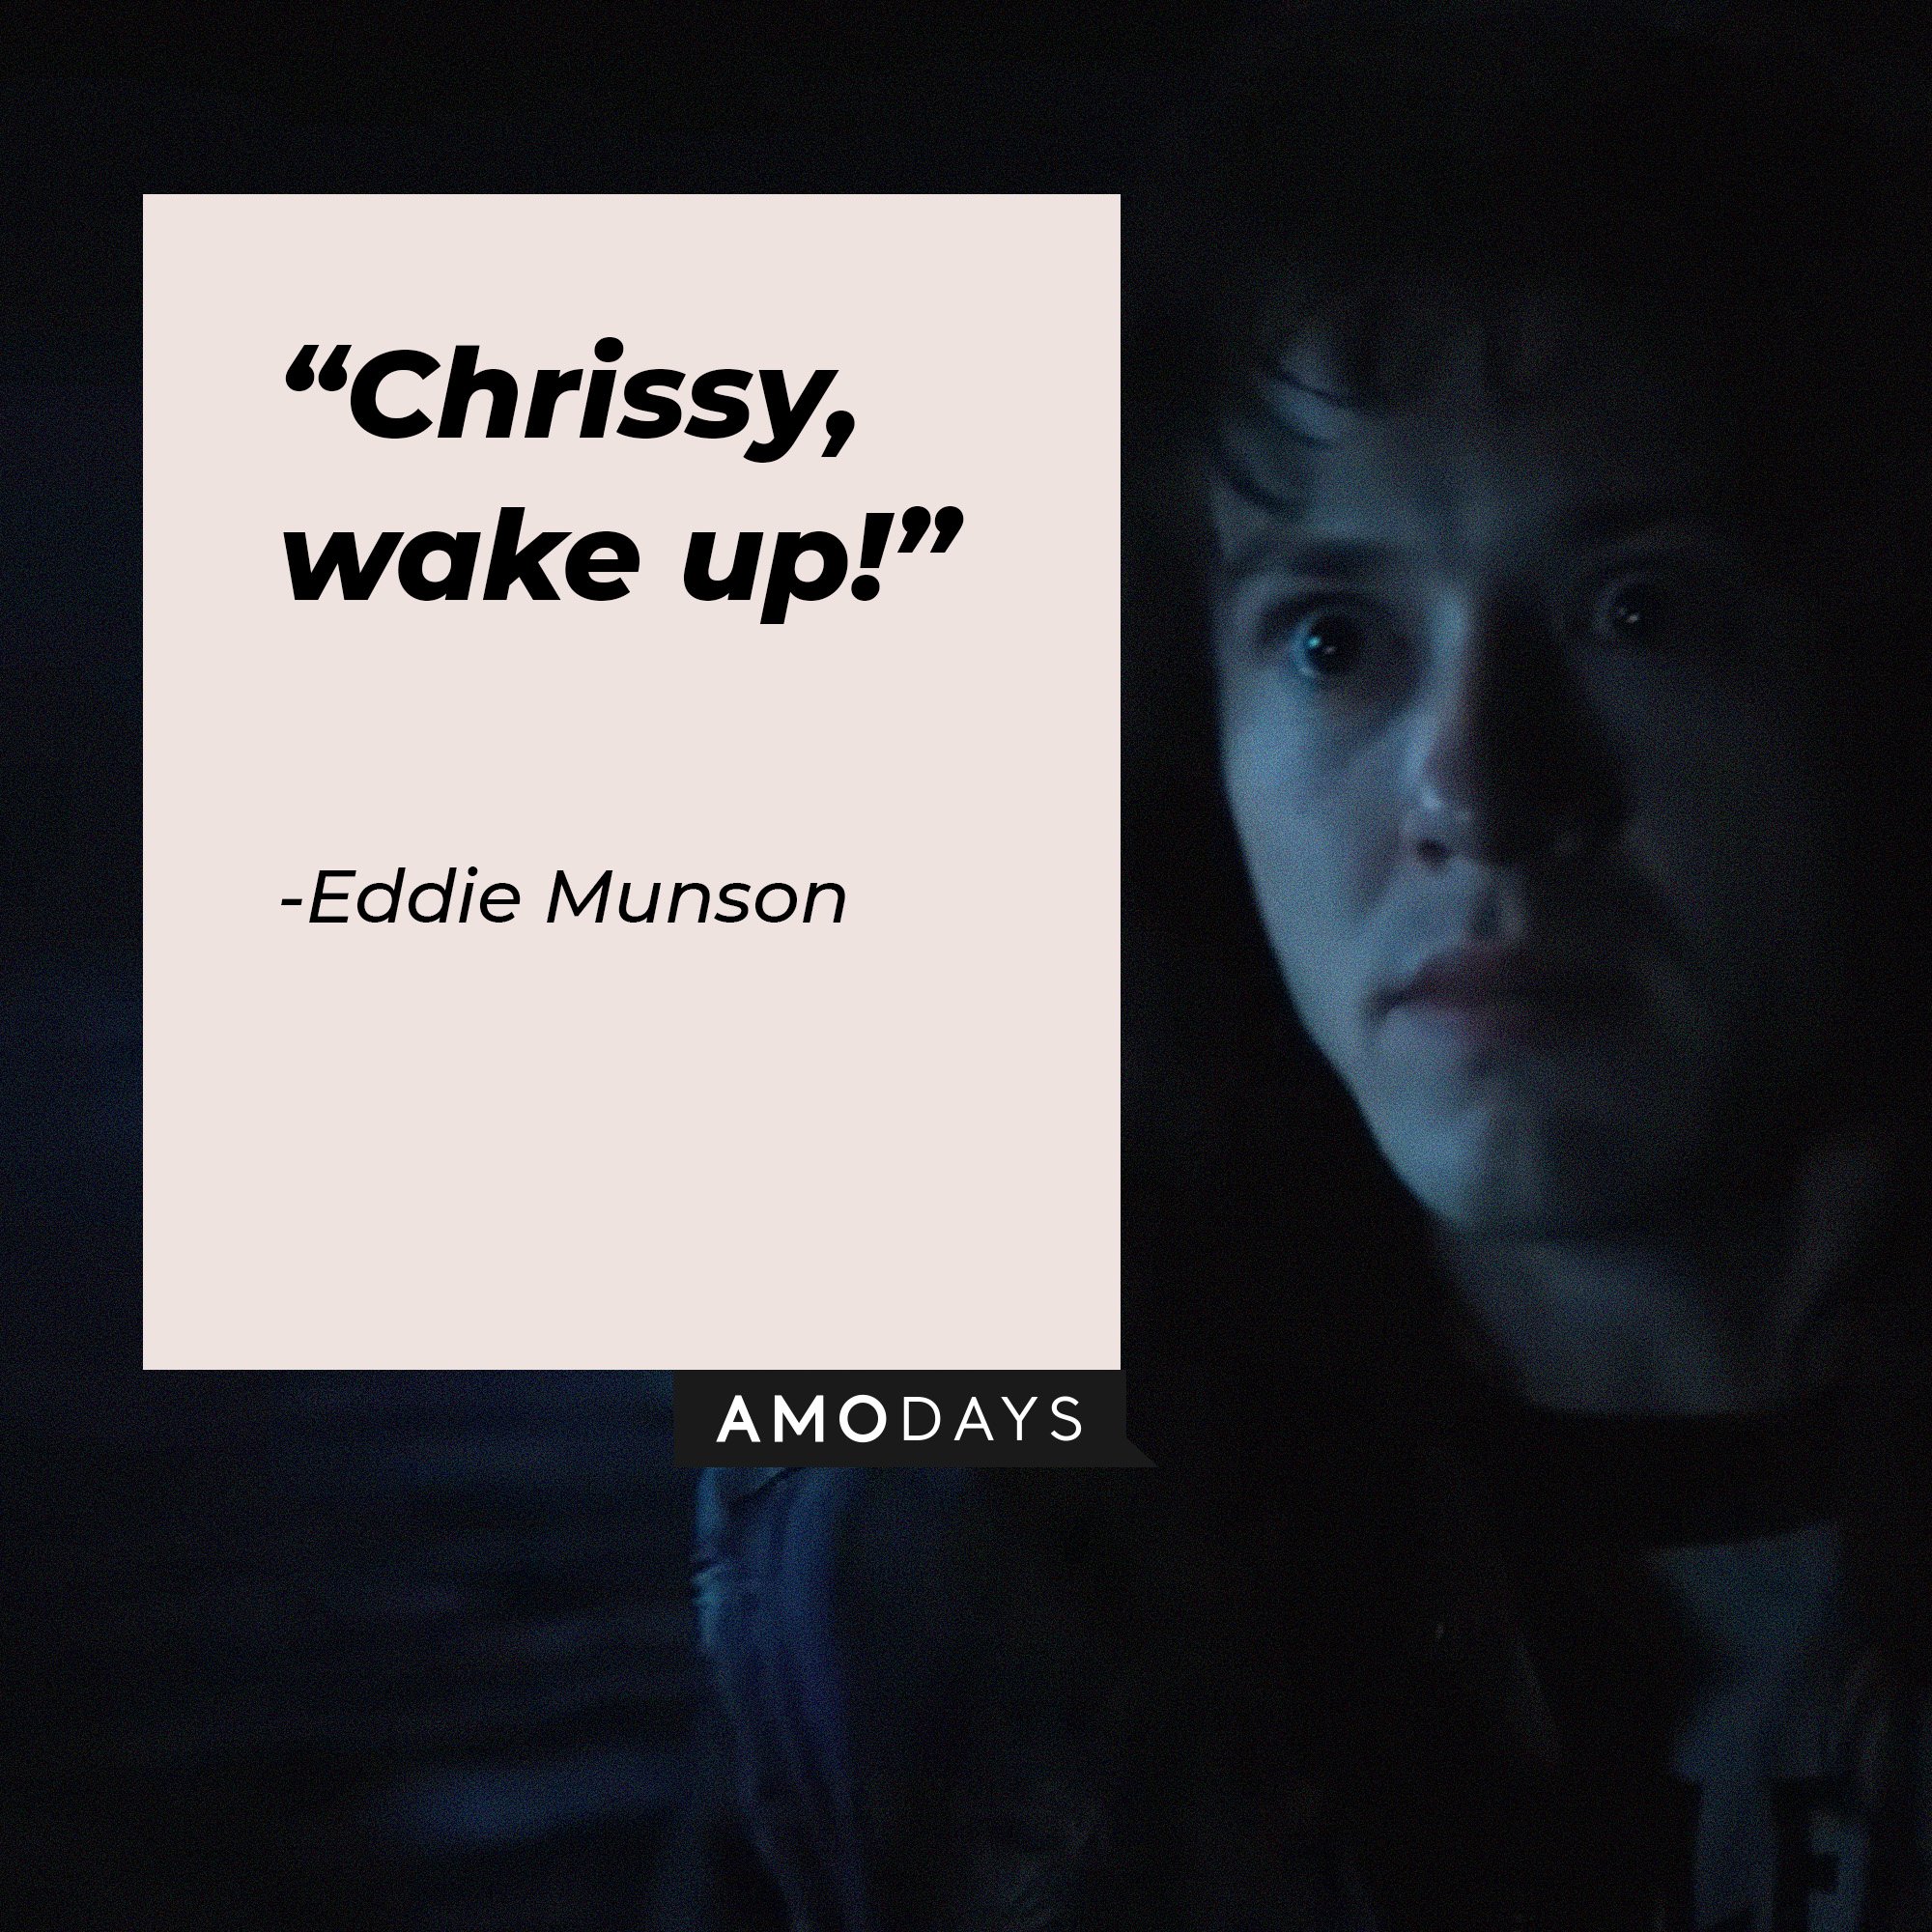 Eddie Munson’s quote: “Chrissy, wake up!”  | Image: AmoDays